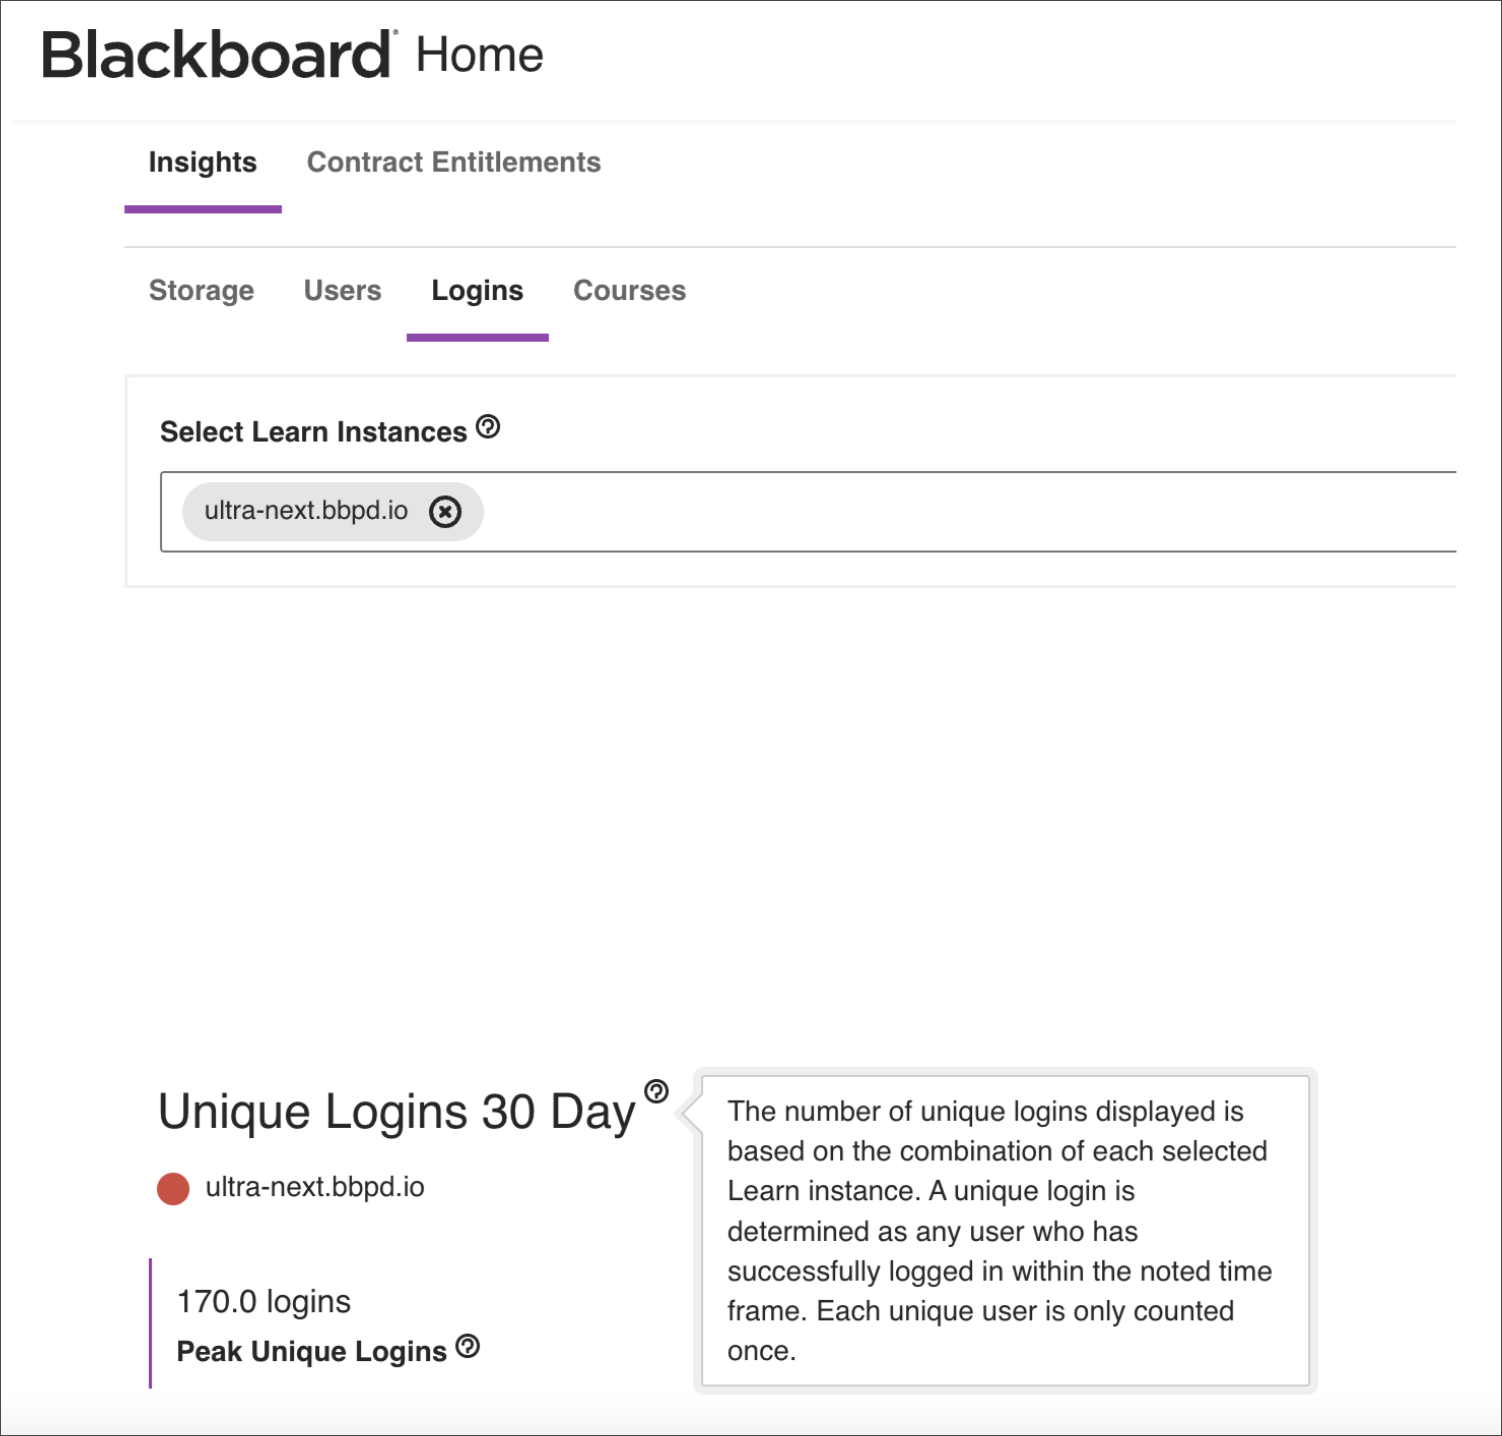 Unique logins description within the Blackboard Home page